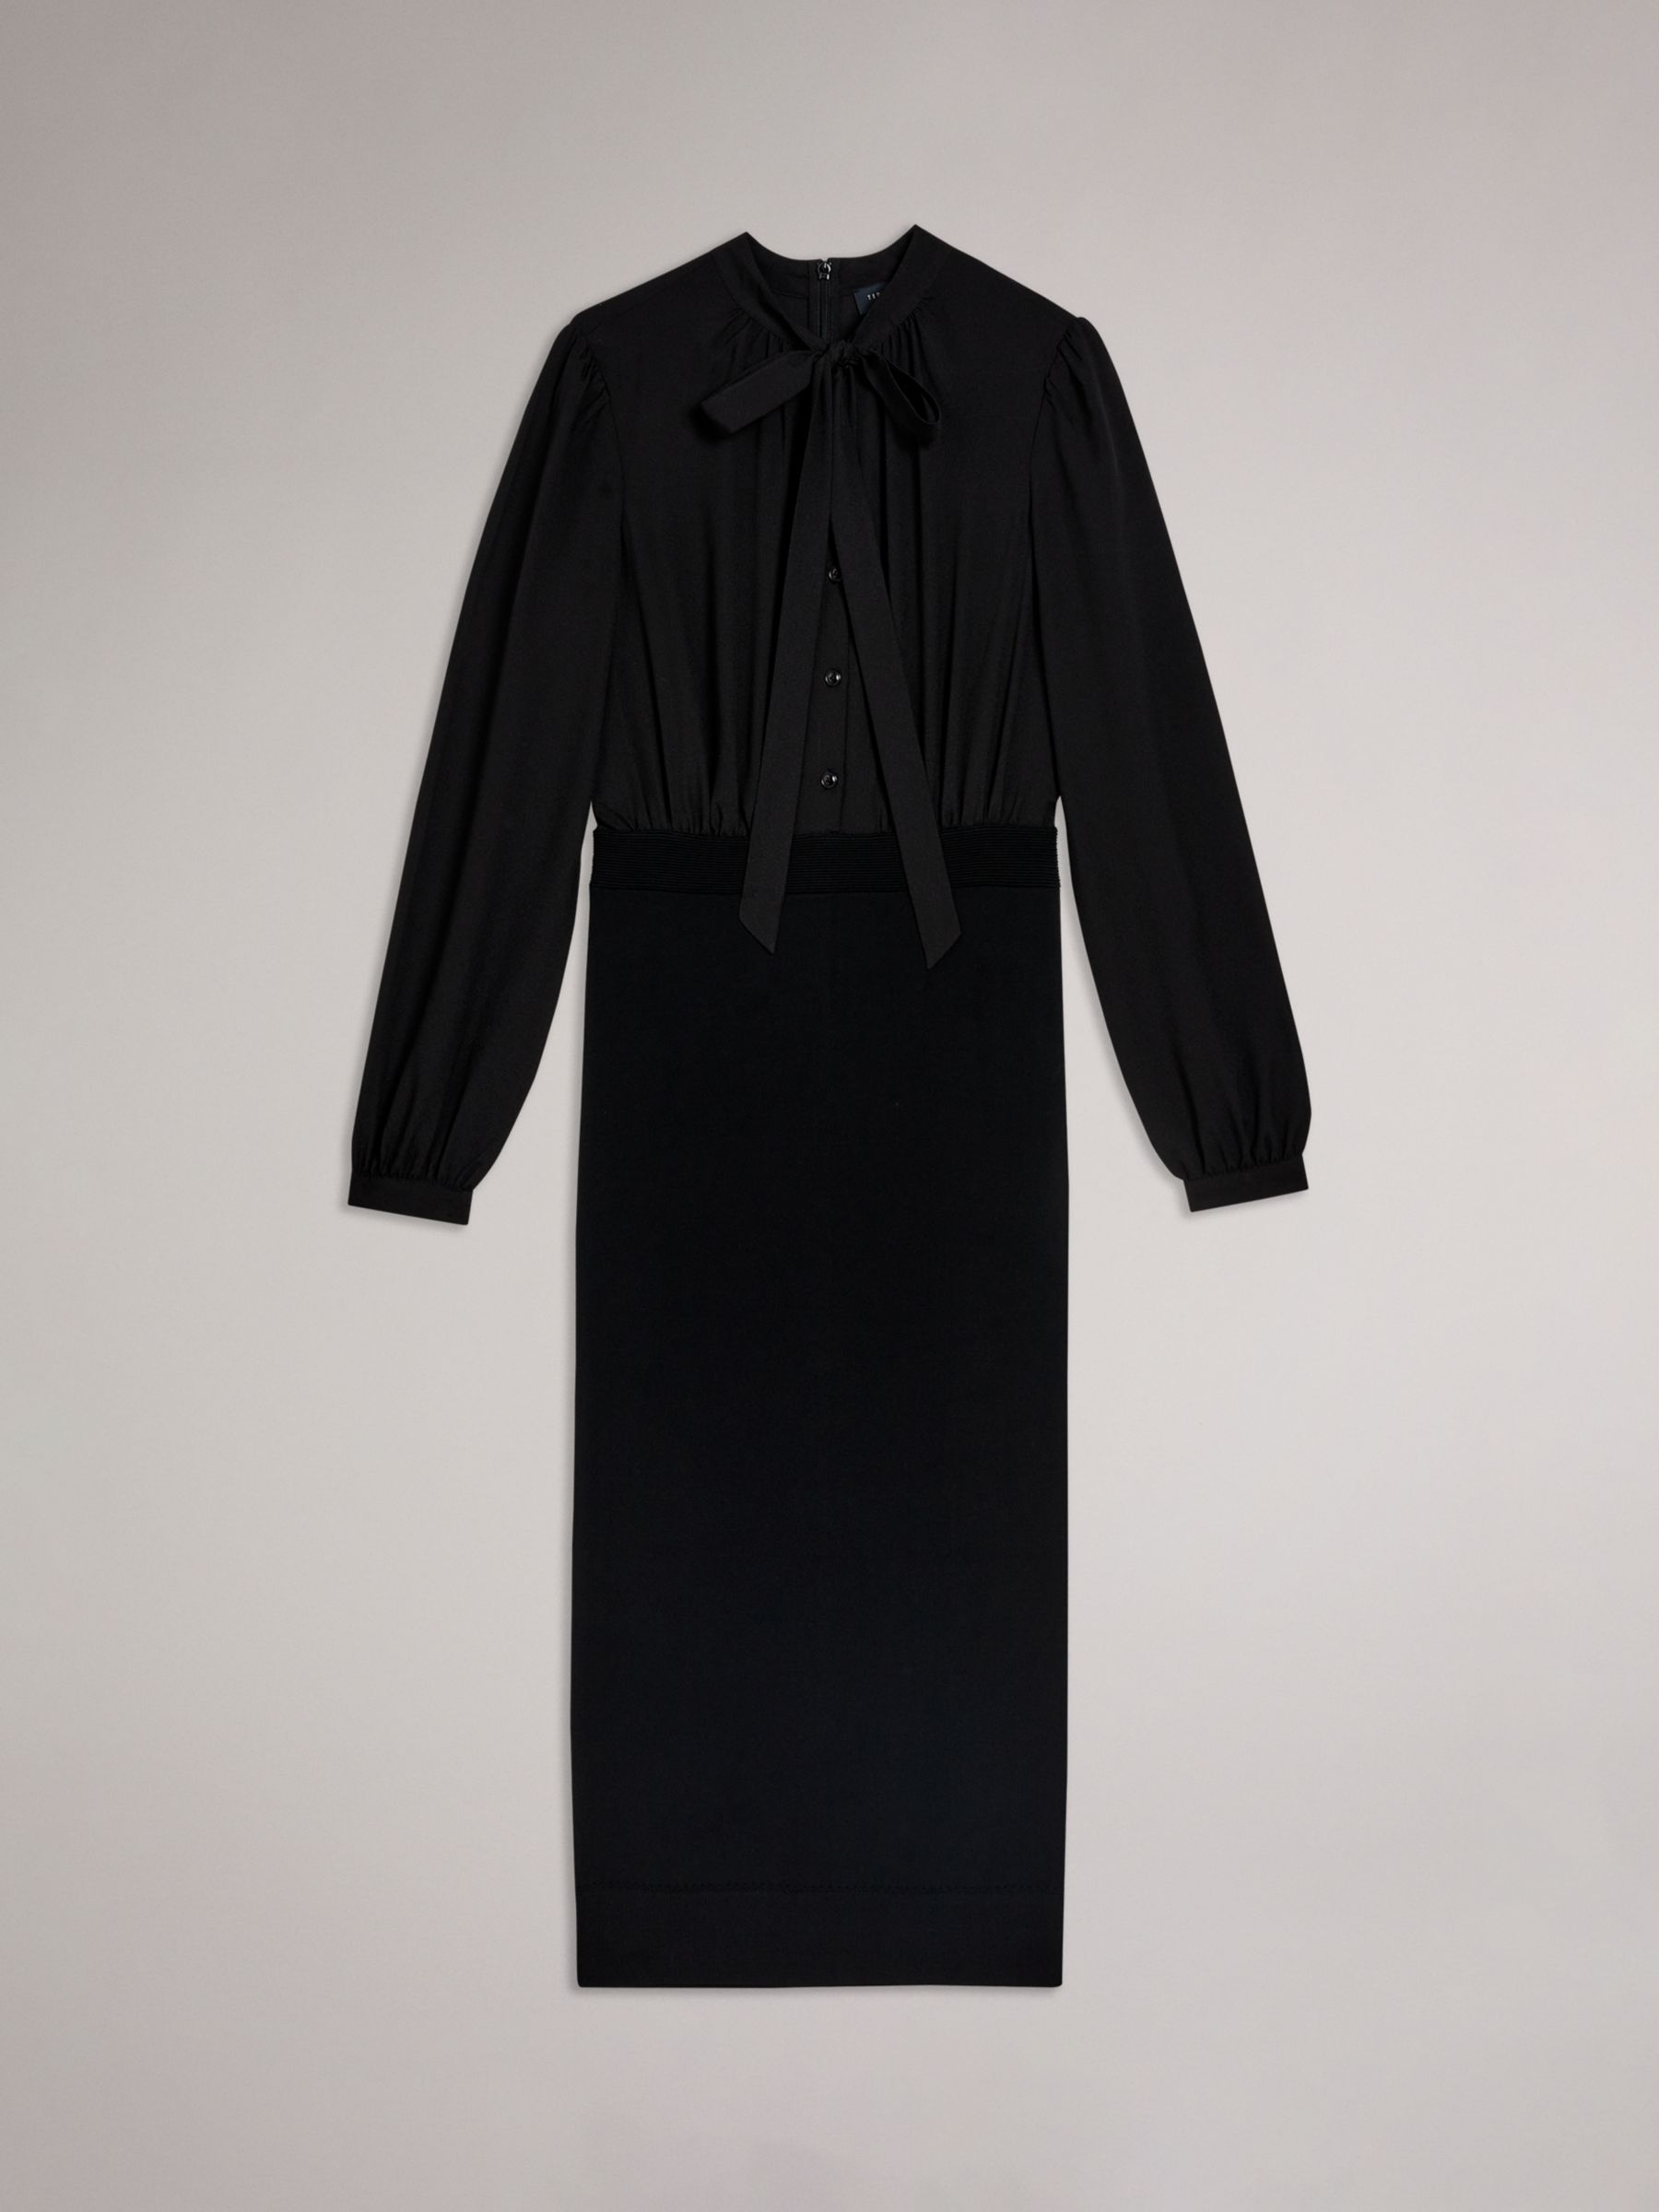 Ted Baker Mersea Knitted Pencil Skirt Midi Dress, Black, 8